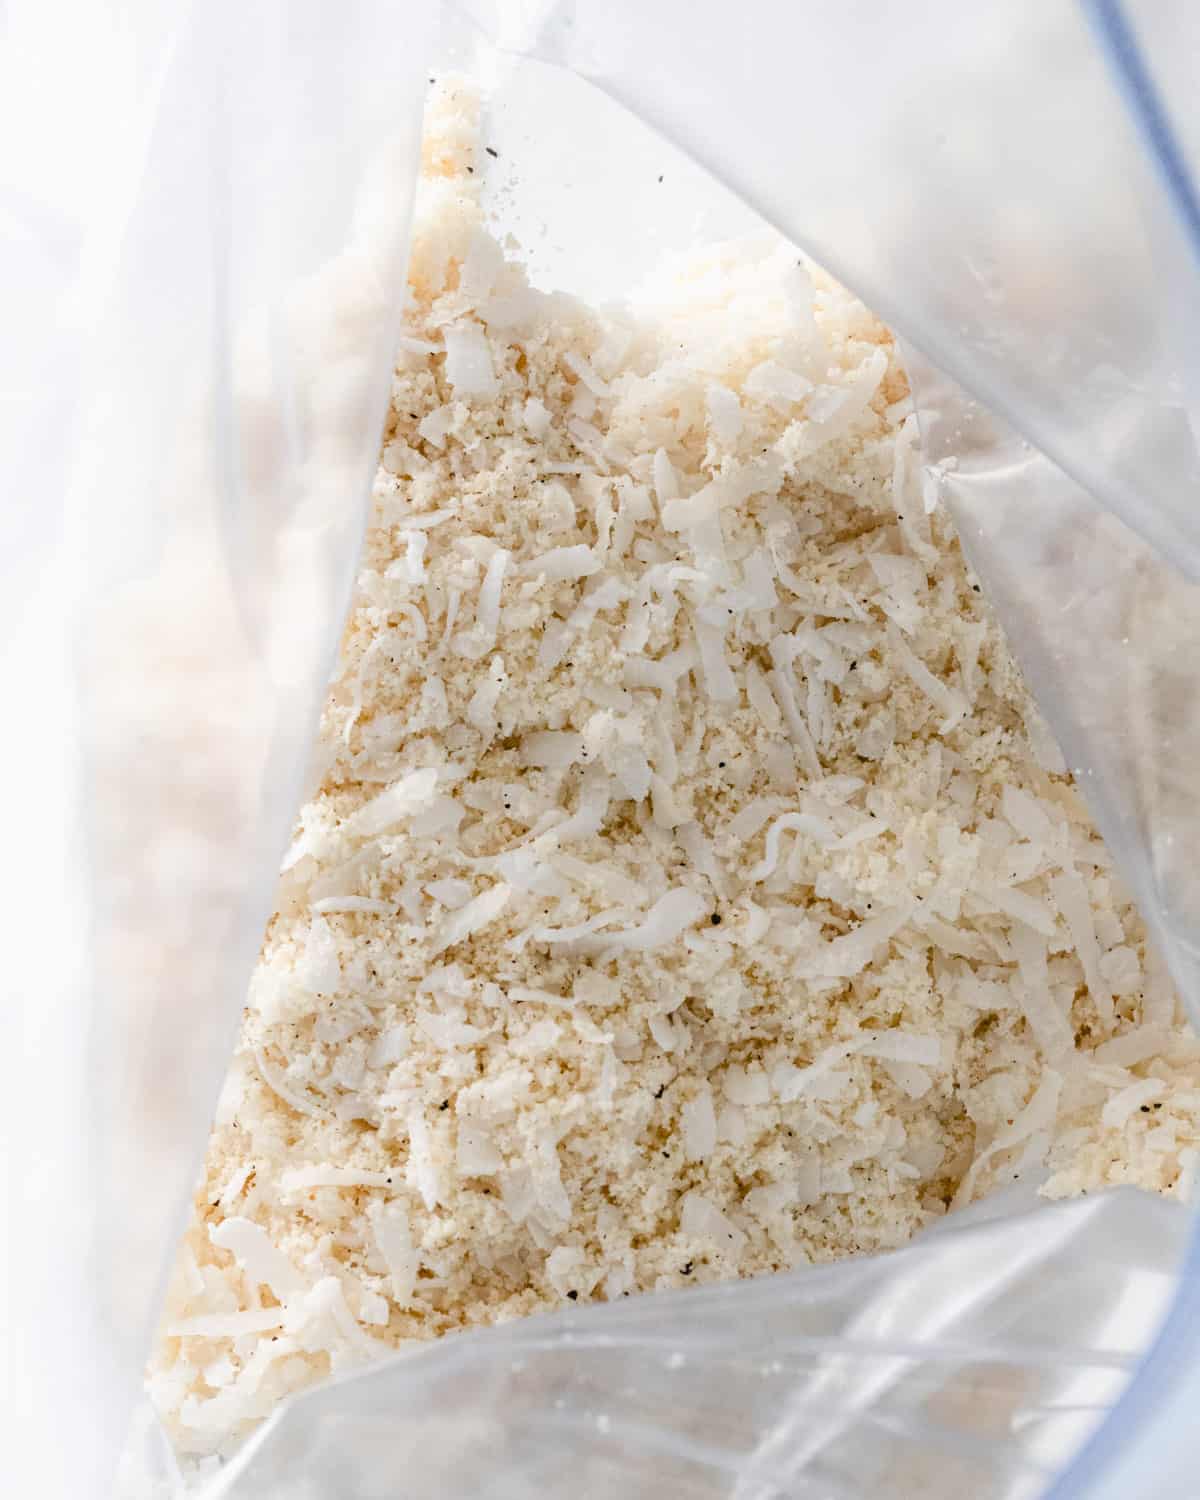 A bag of shredded coconut, almond flour, and seasonings.